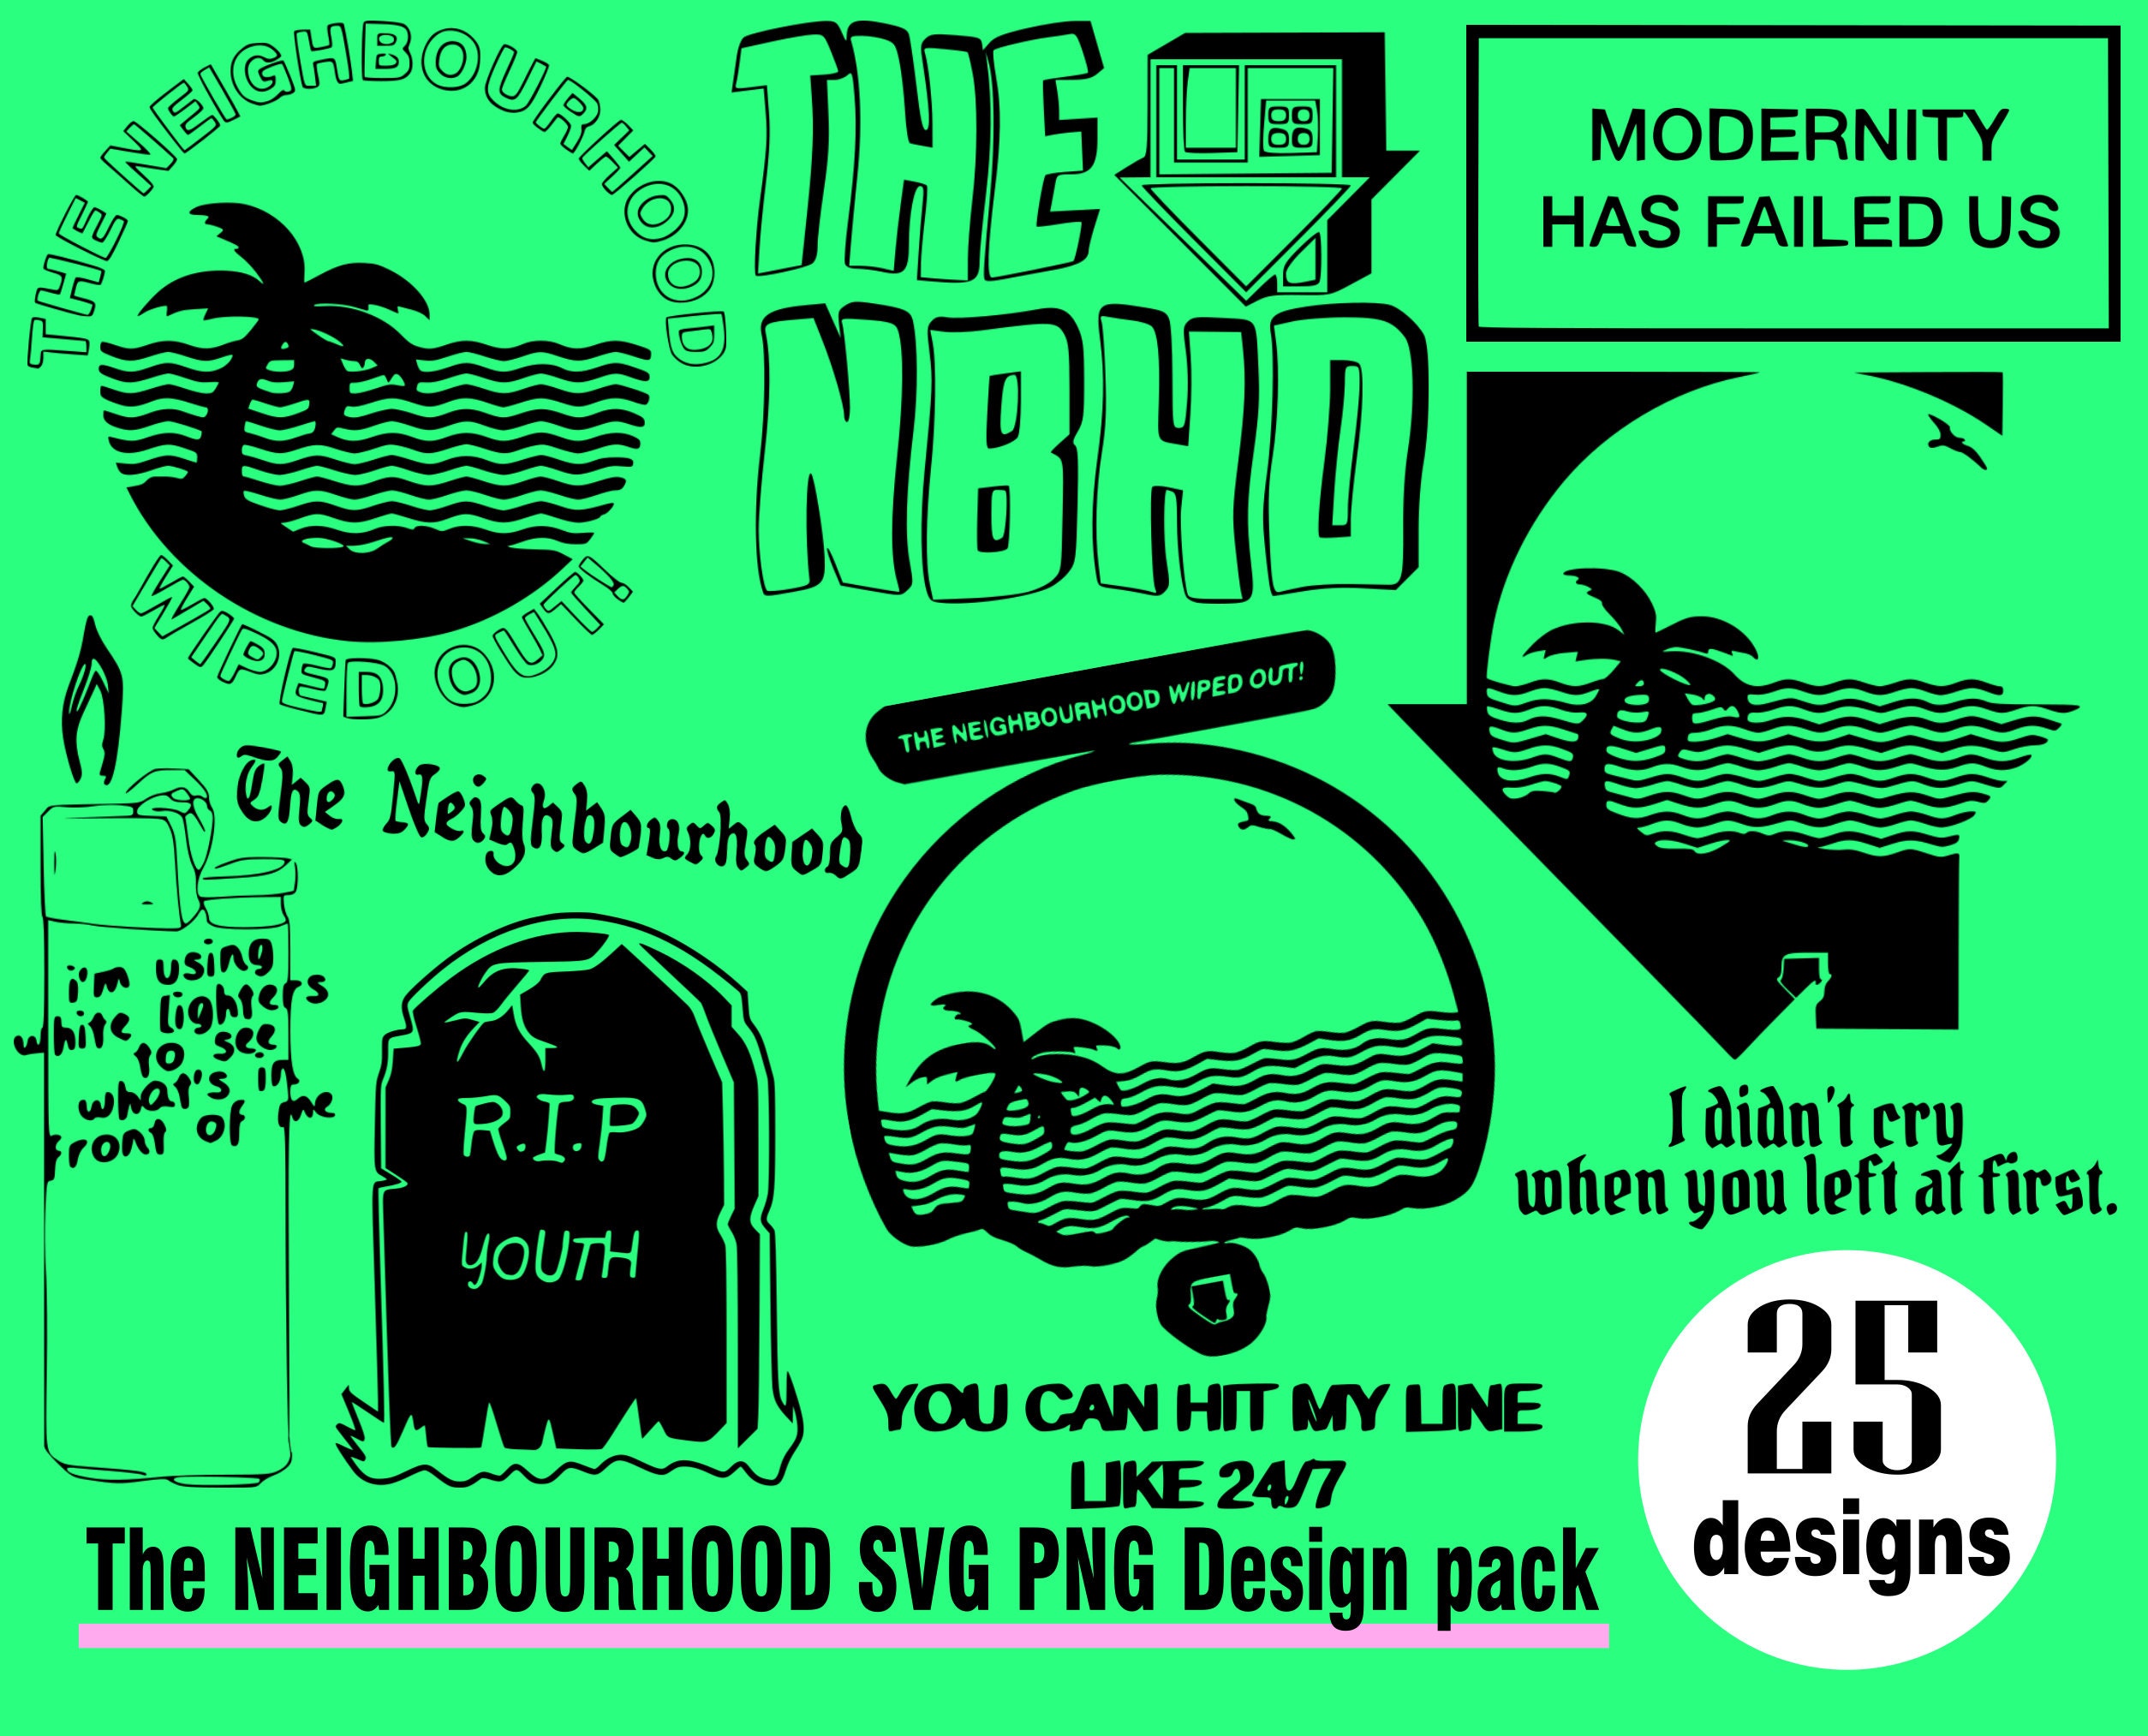 The Neighborhood Band Shirt